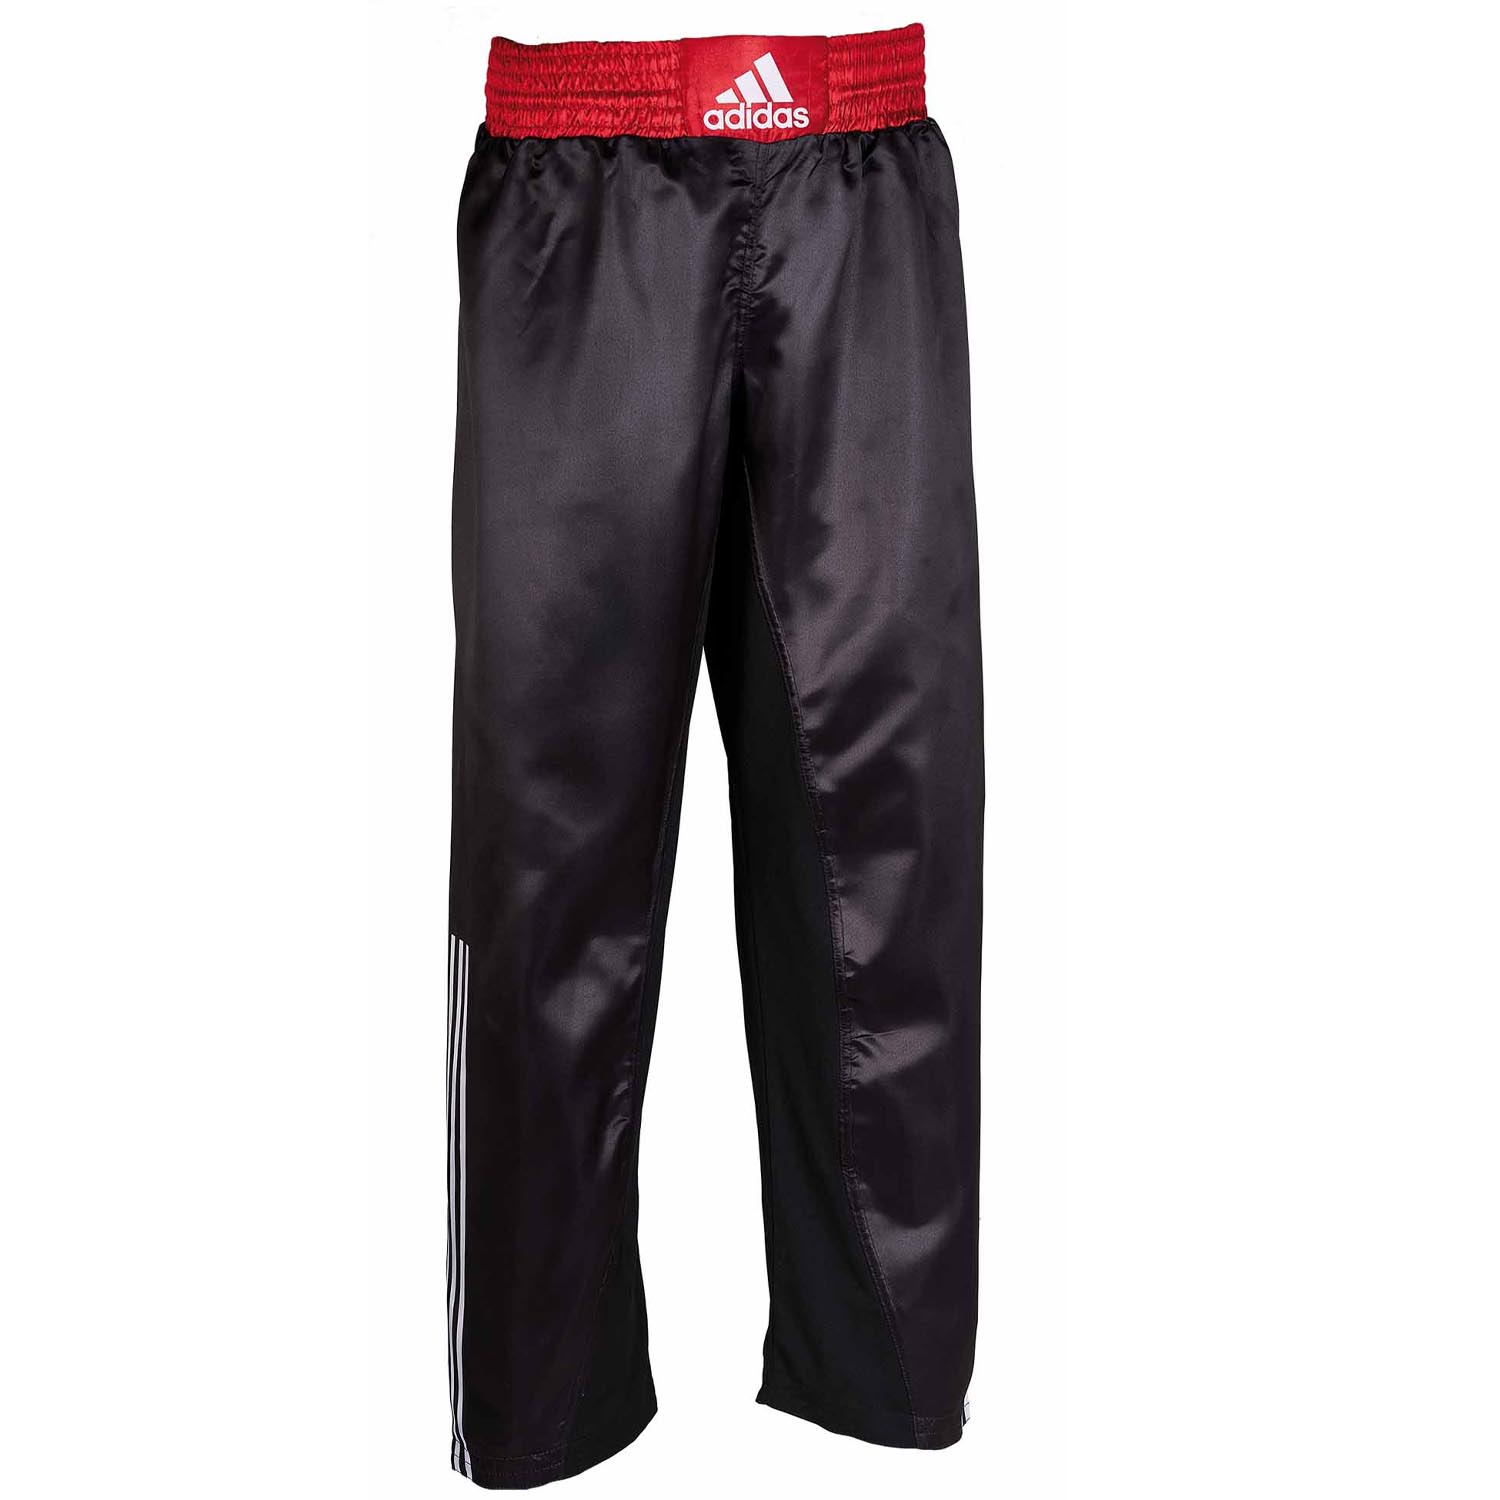 adidas Kickboxhosen, schwarz-rot